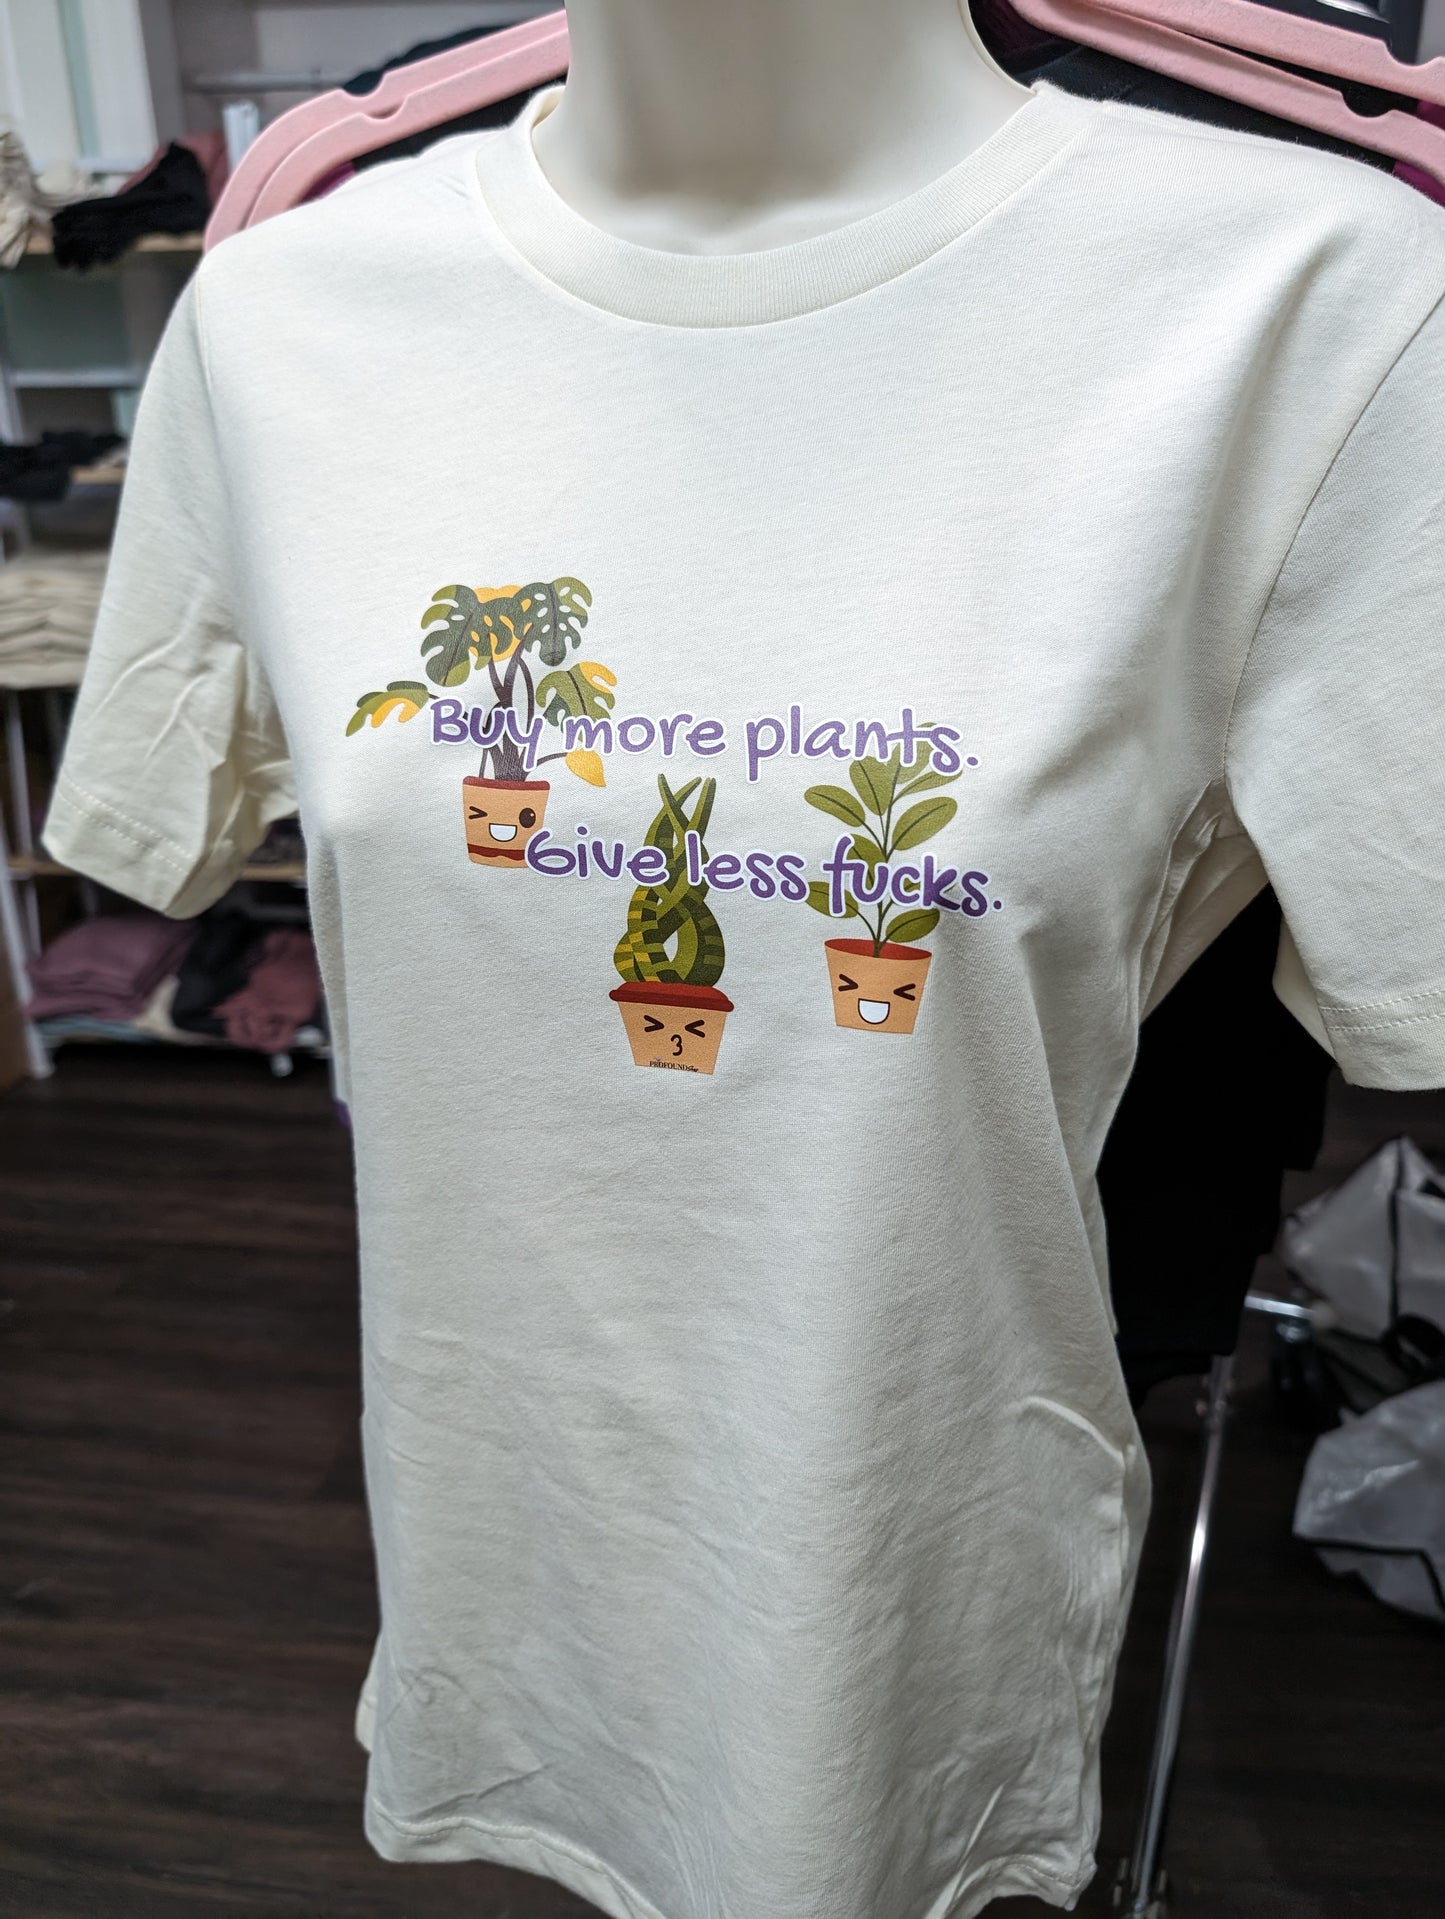 Buy More Plants, Give Less Fucks T-Shirt